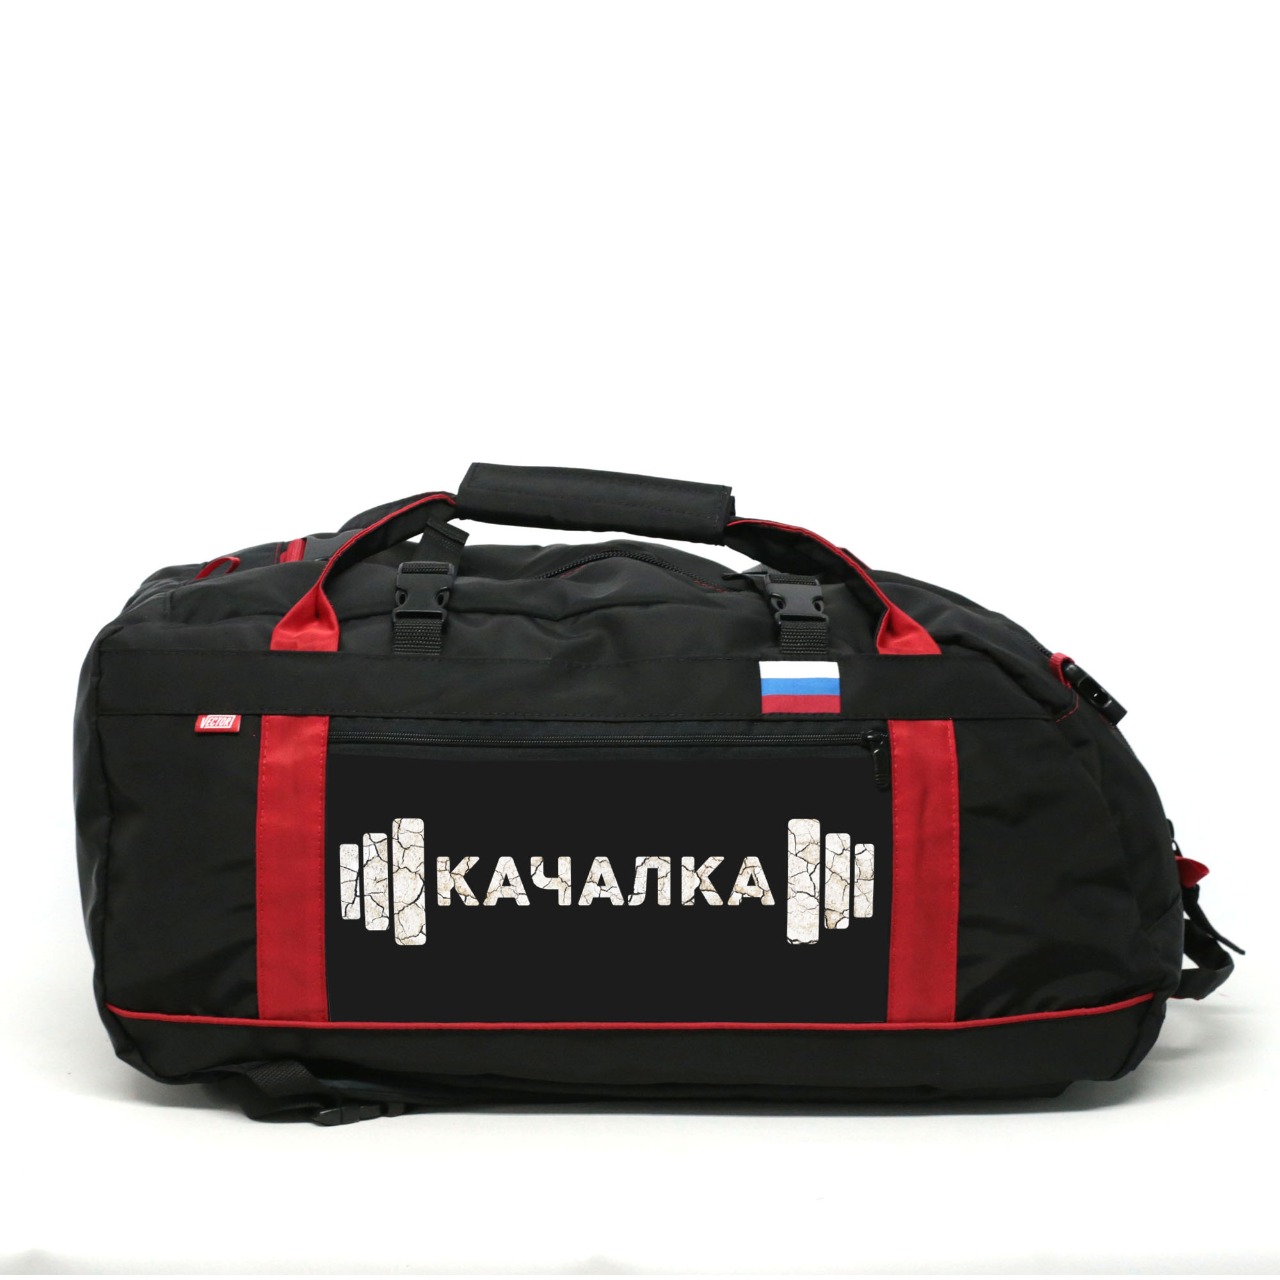 Спортивная сумка Спорт Сибирь Качалка 45 литров черная